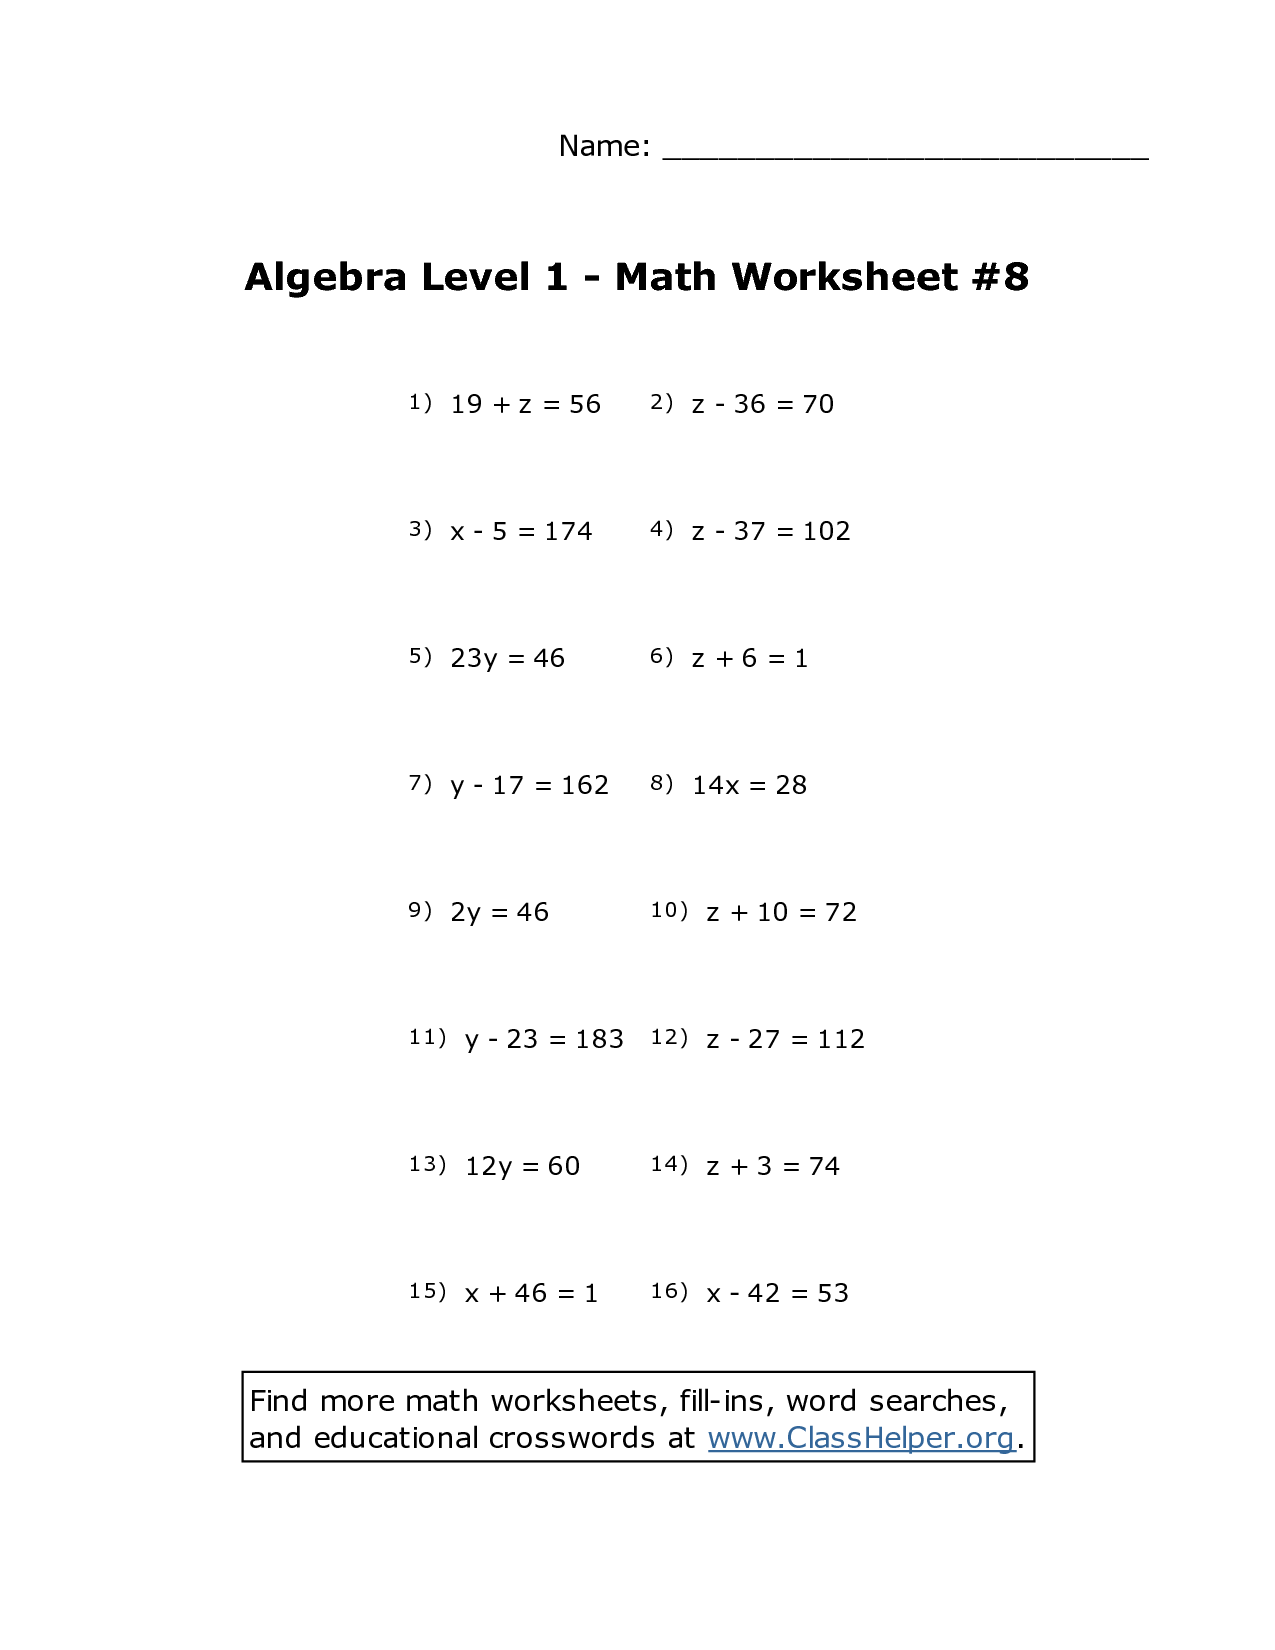 College Algebra Math Worksheets Image